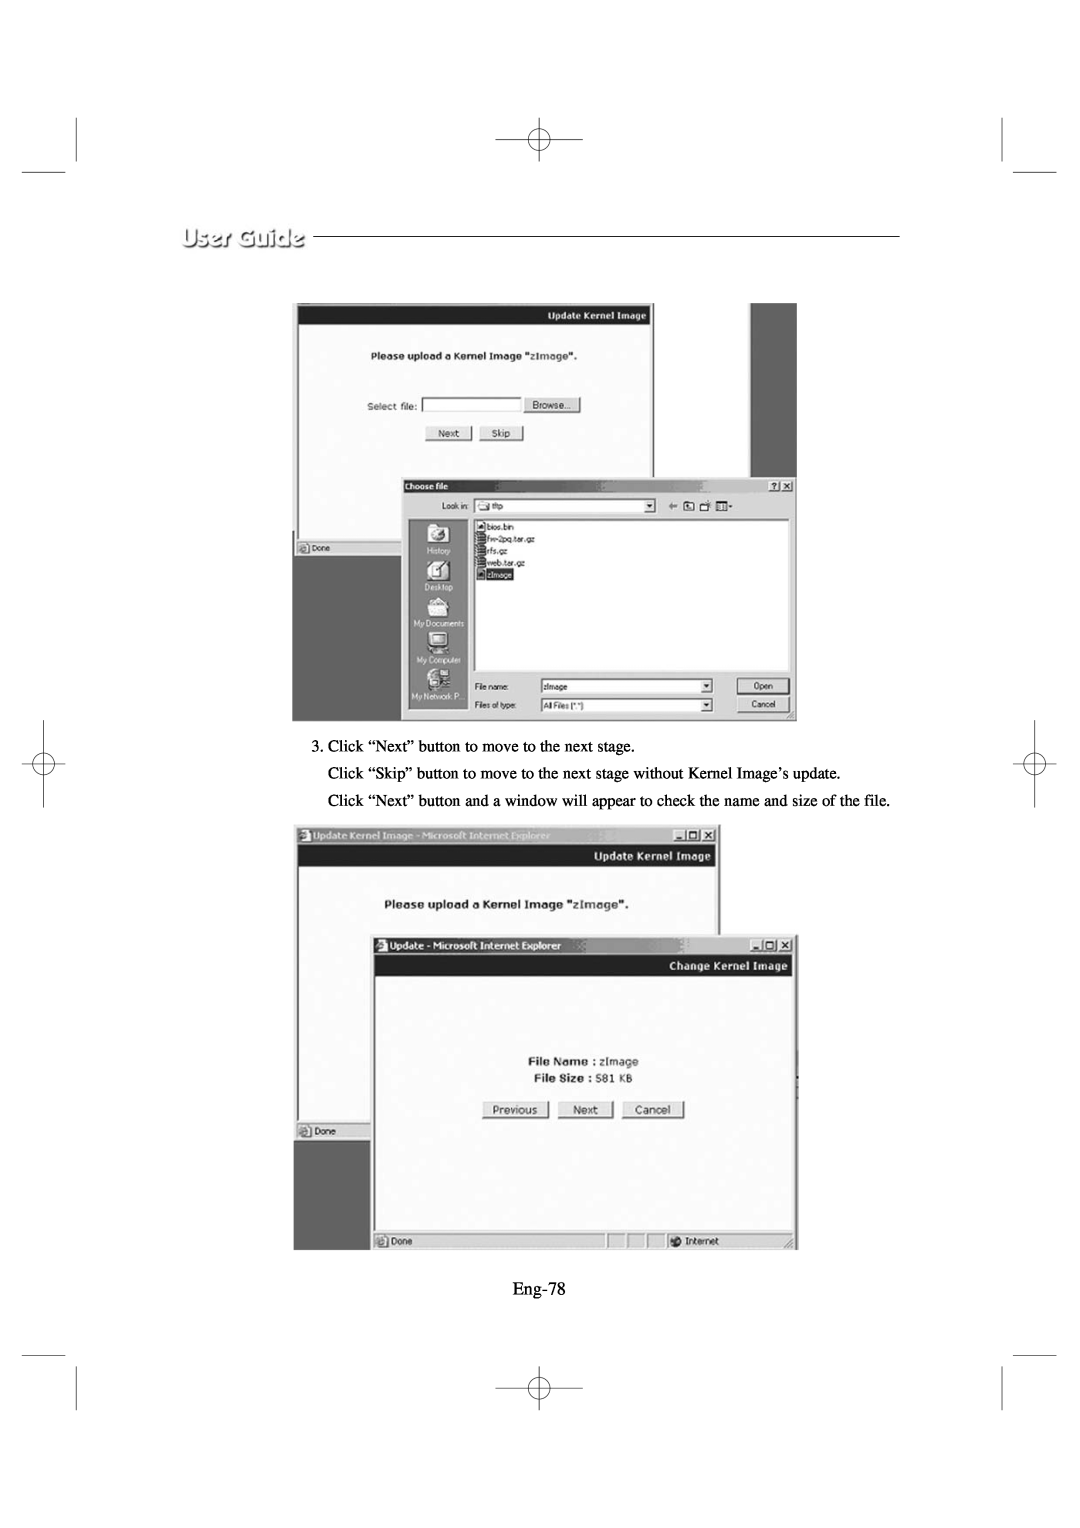 Samsung SSC17WEB manual Eng-78 